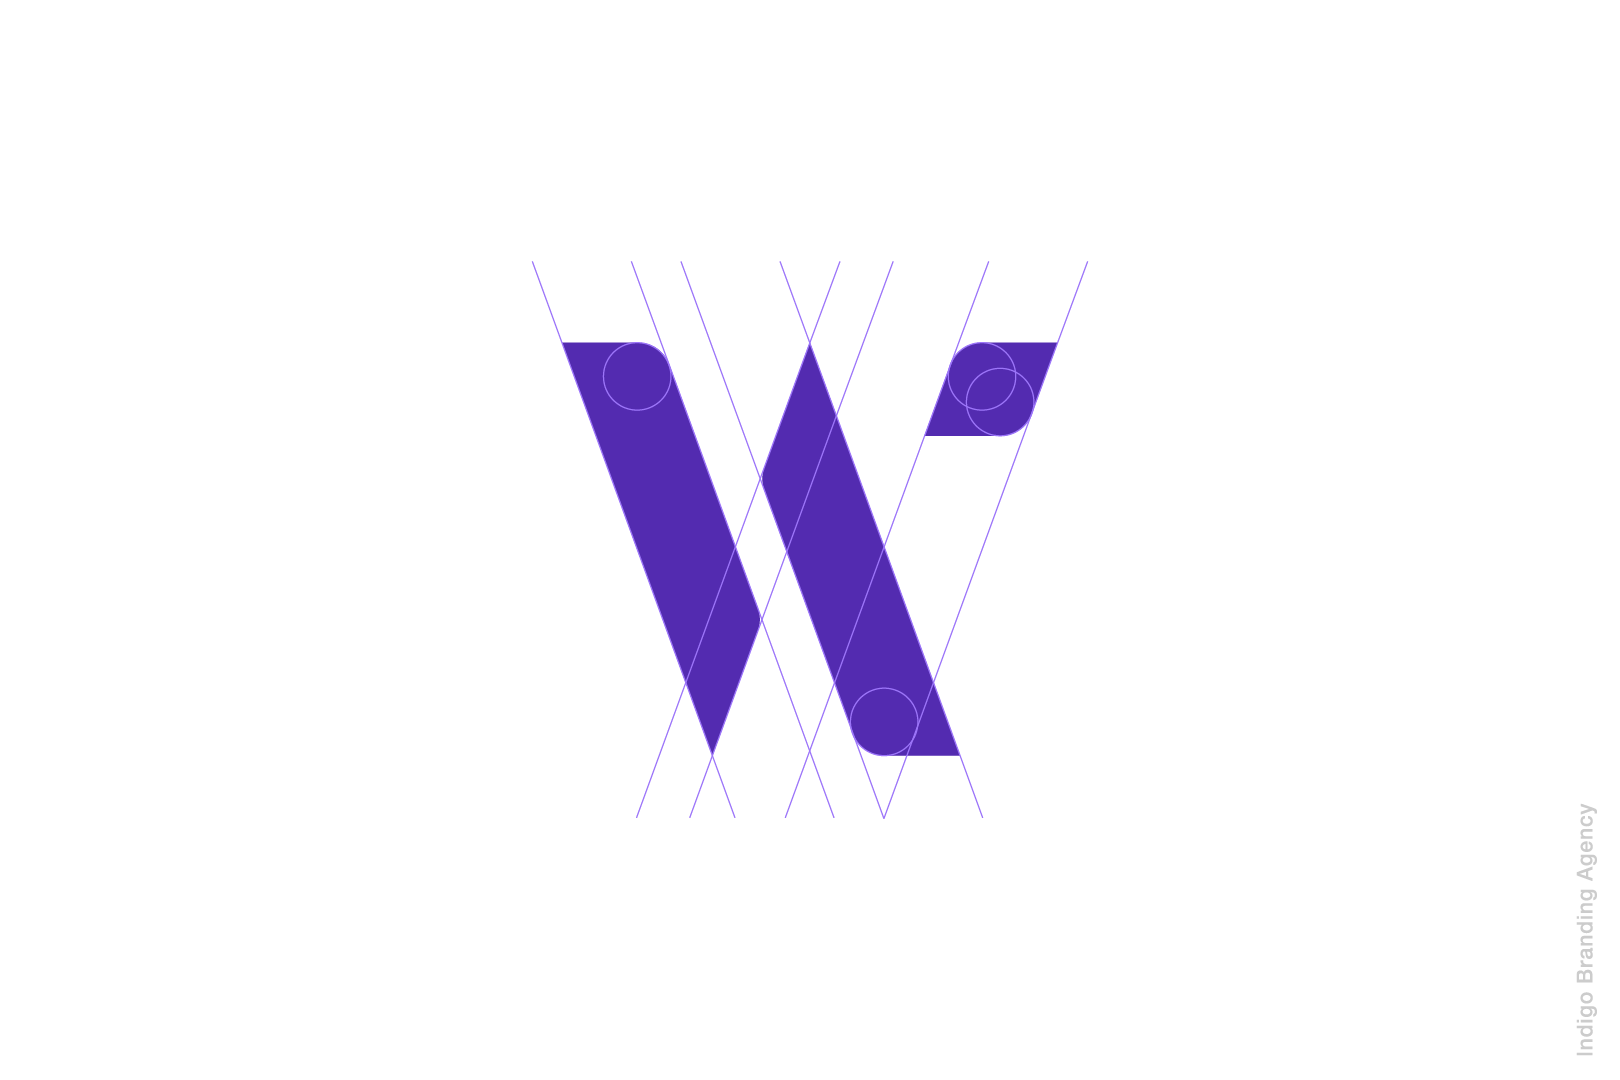 Waisely branding and logo design by Indigo branding